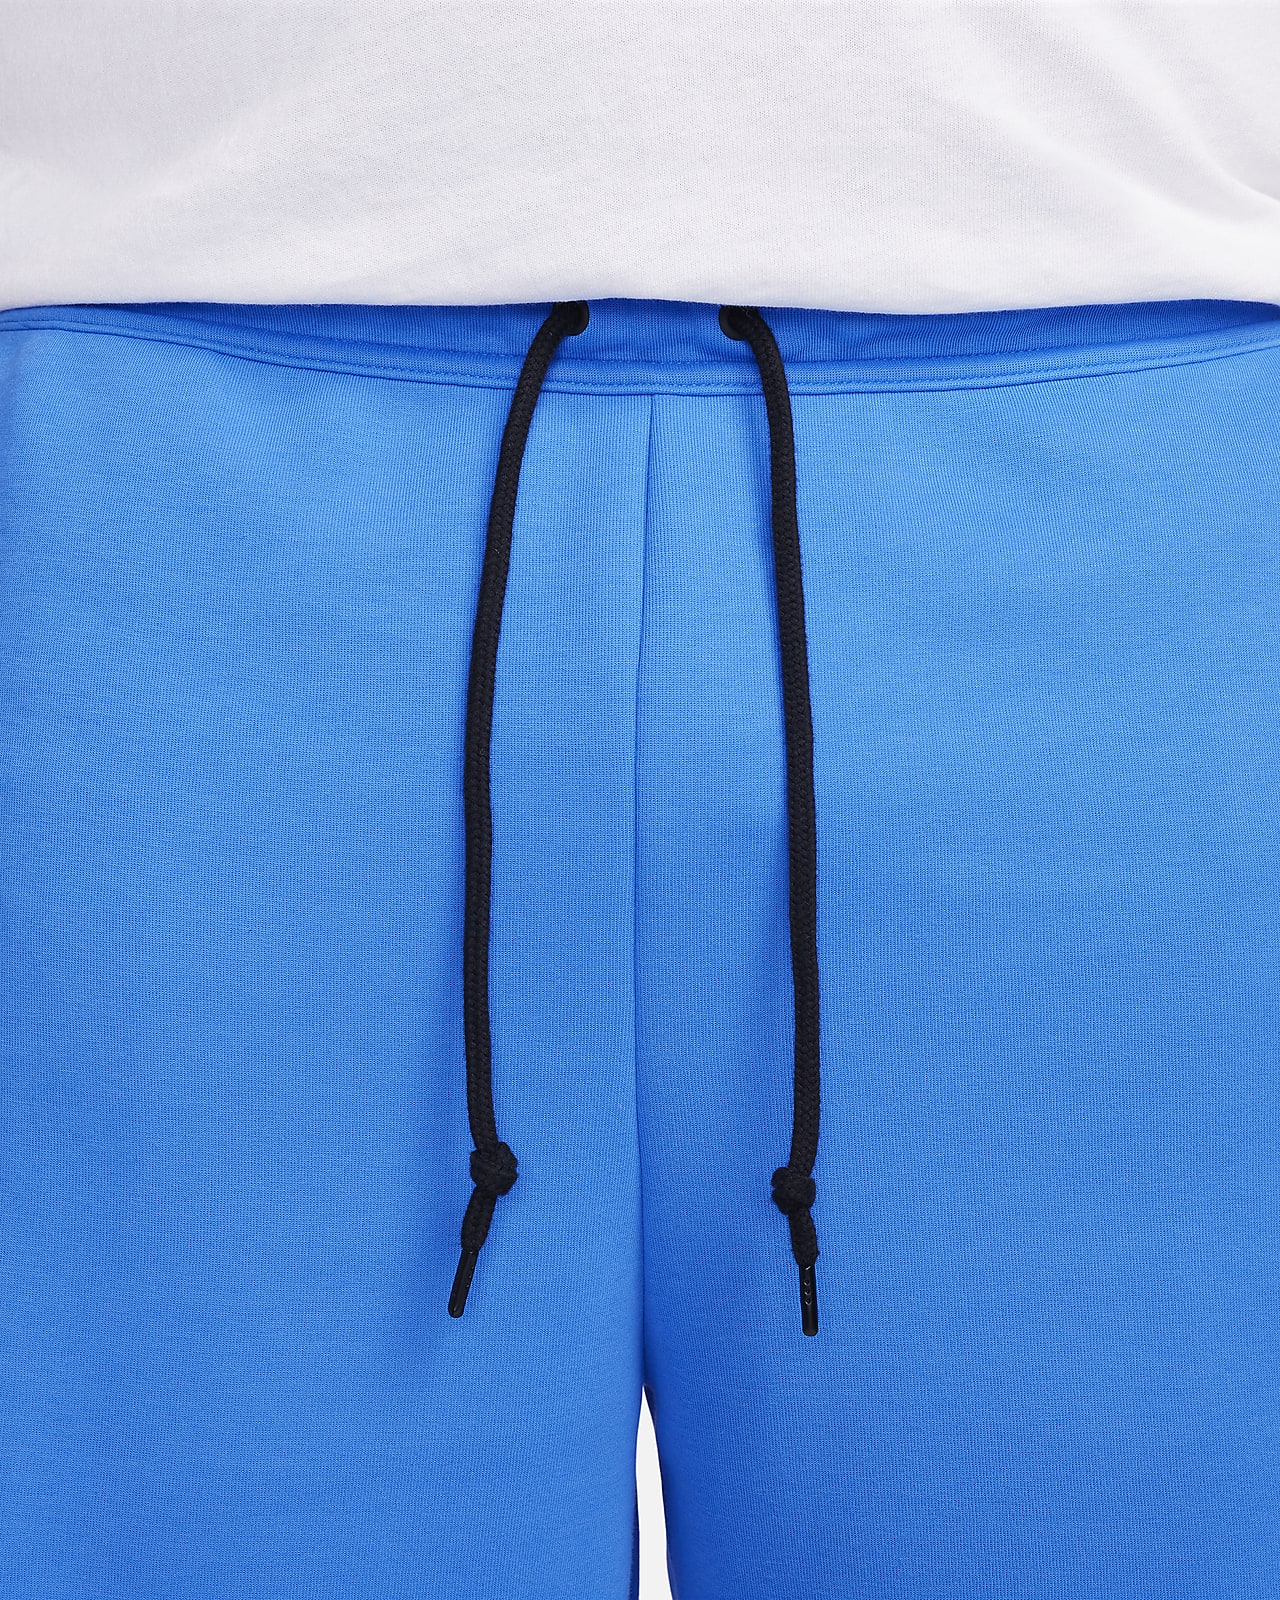 Nike Tech Fleece Mens Short Beige FB8171-247 – Shoe Palace